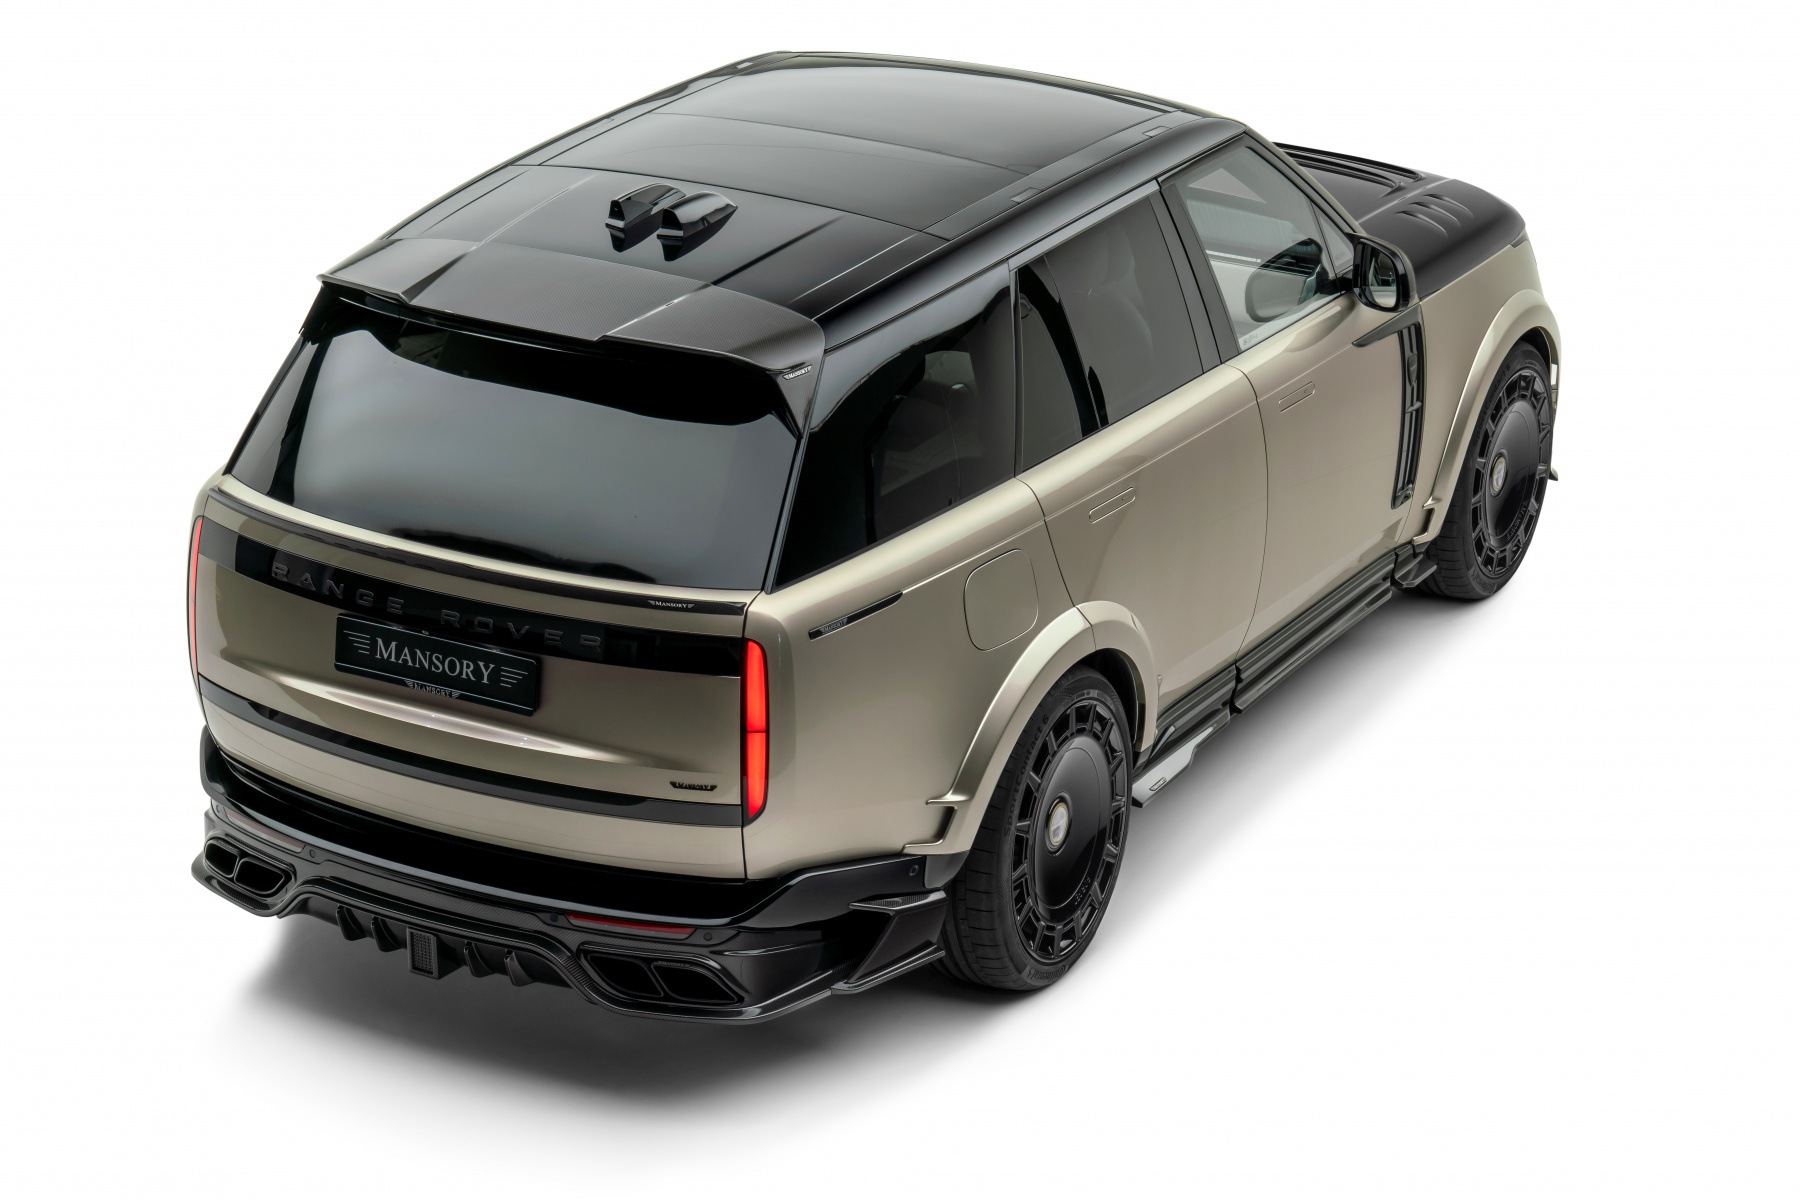 Land Rover Nuevo Range Rover Evoque new on , official Land Rover